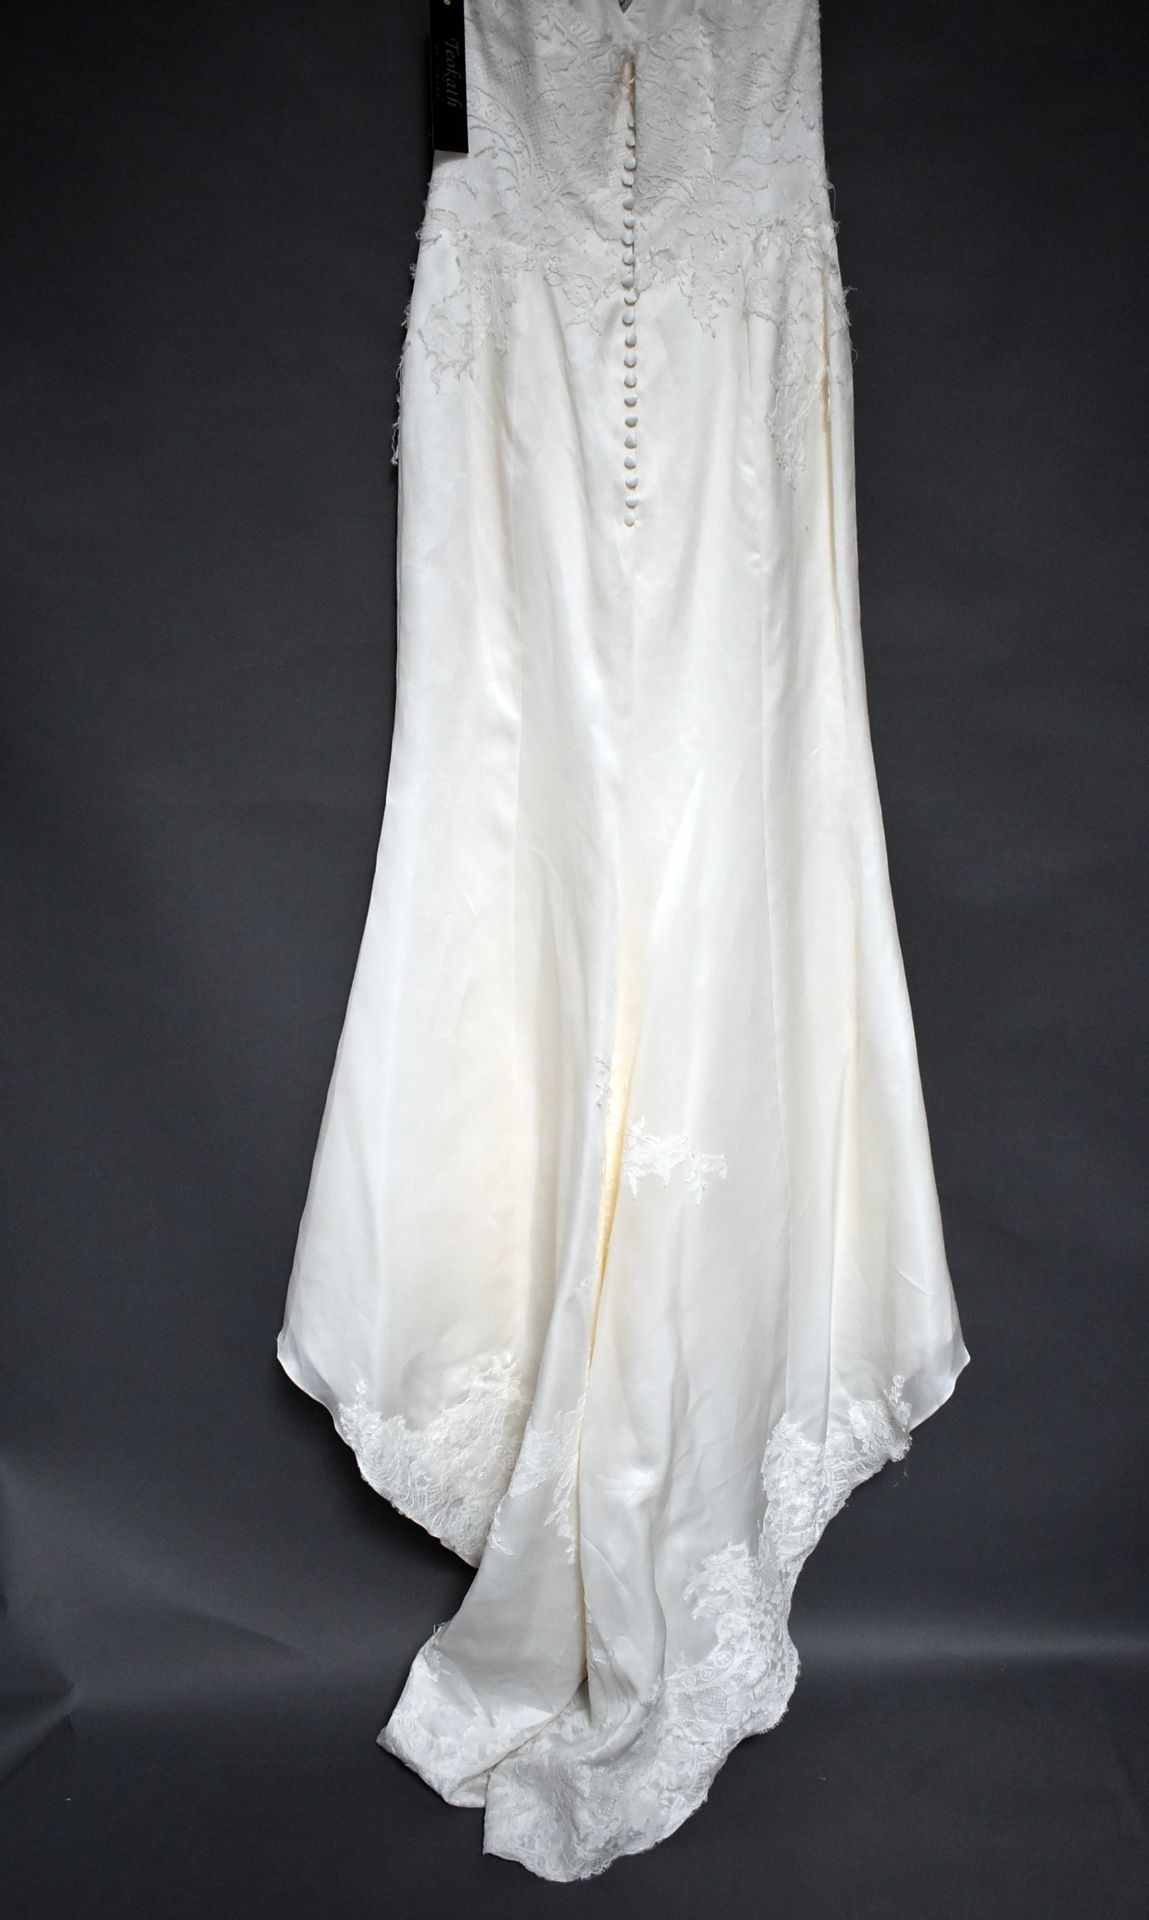 1 x ALAN HANNAH Strapless Lace & Satin Fishtail Dress Designer Wedding Dress Bridal RRP £2,700 UK 14 - Image 2 of 7